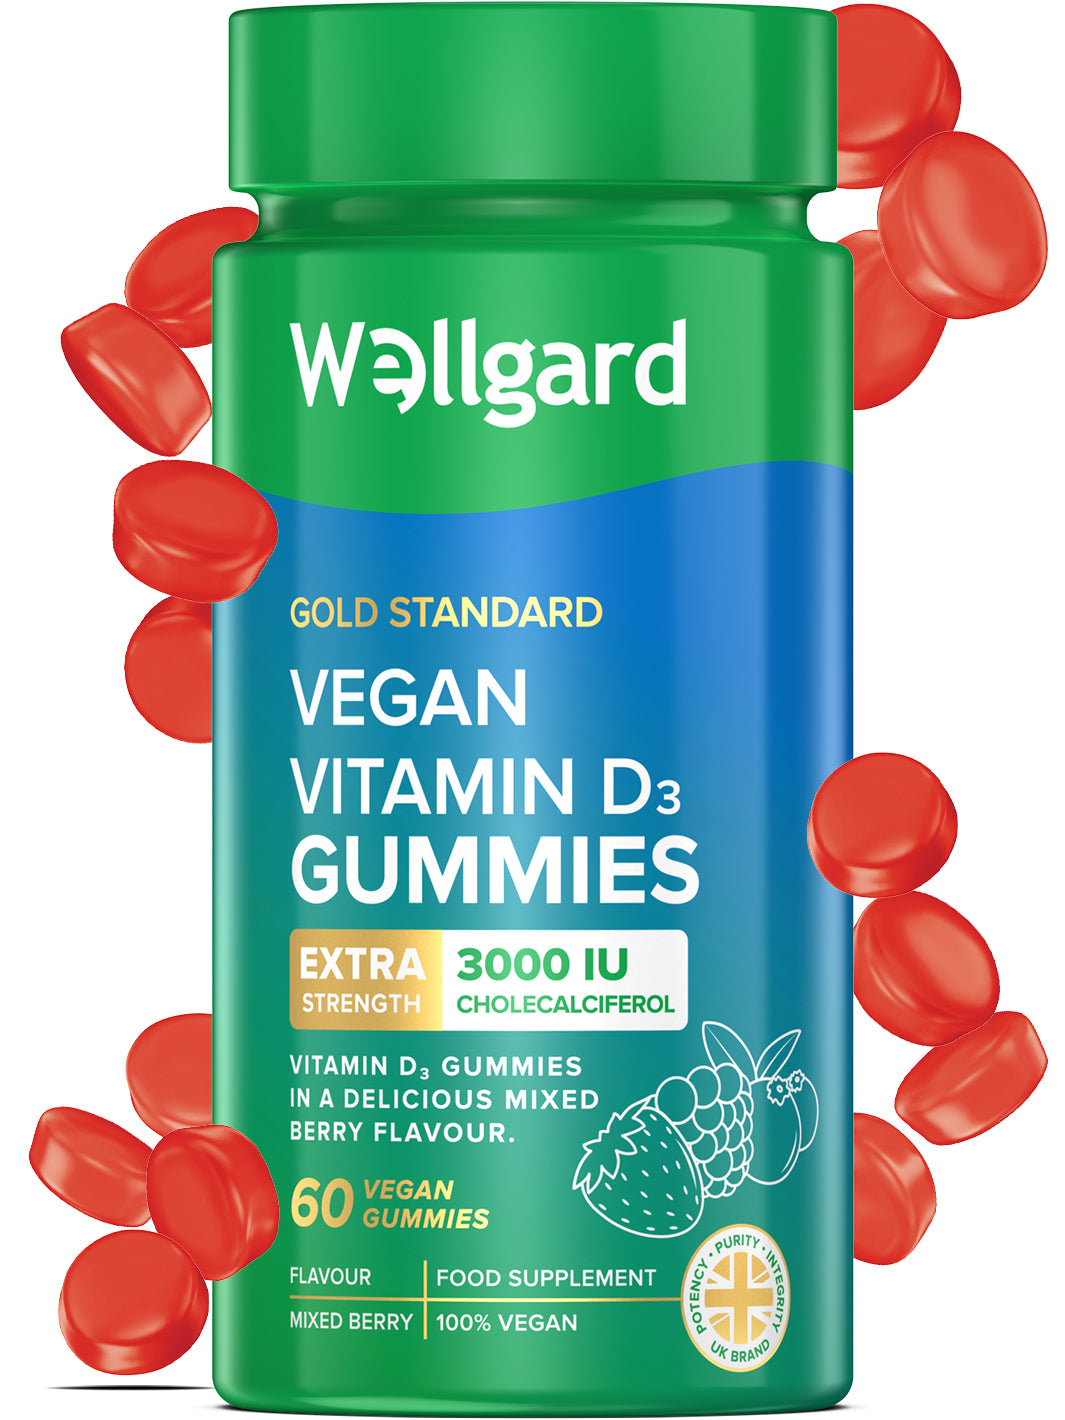 Vegan Vitamin D3 Gummies